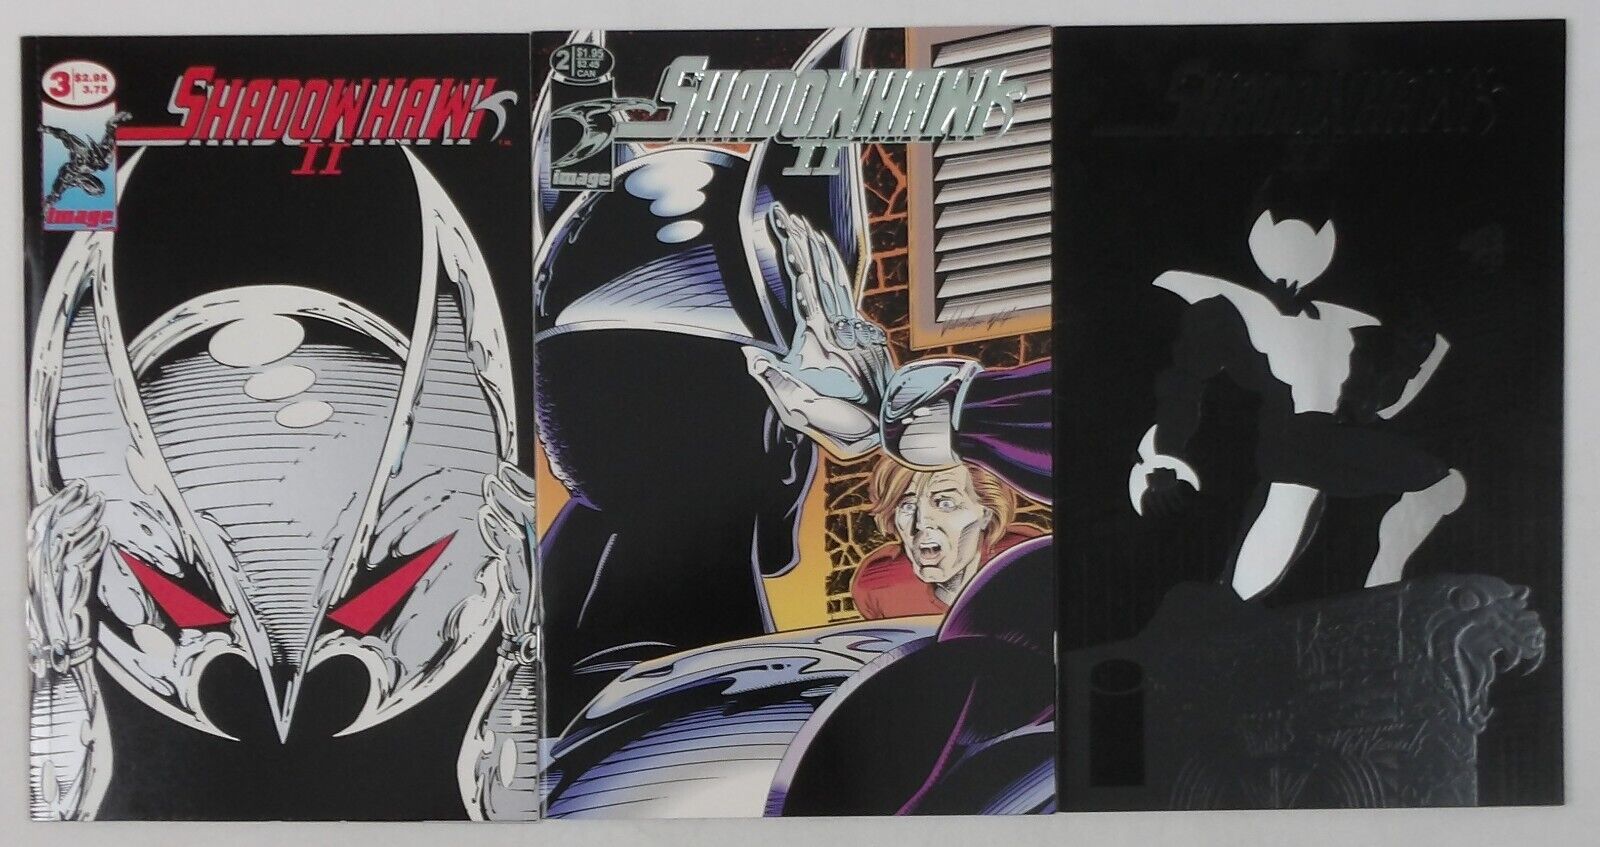 Shadowhawk II #1-3 VF/NM complete series - Jim Valentino - Image Comics set 2